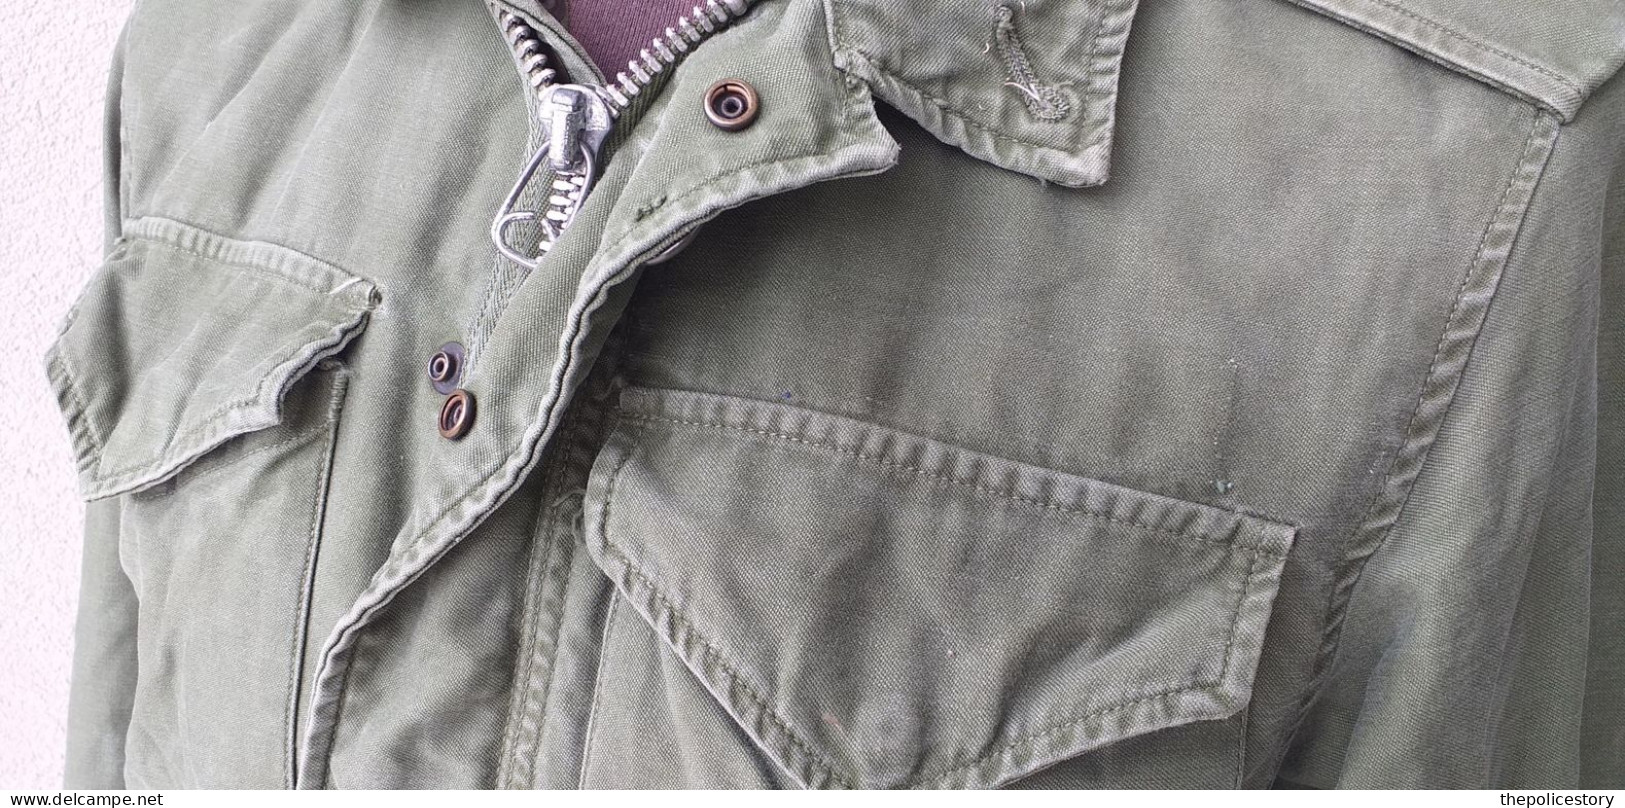 Field Jacket U.S. Army Coat Man's Cotton W/R Sateen O.D. tg.XS anni 60 originale